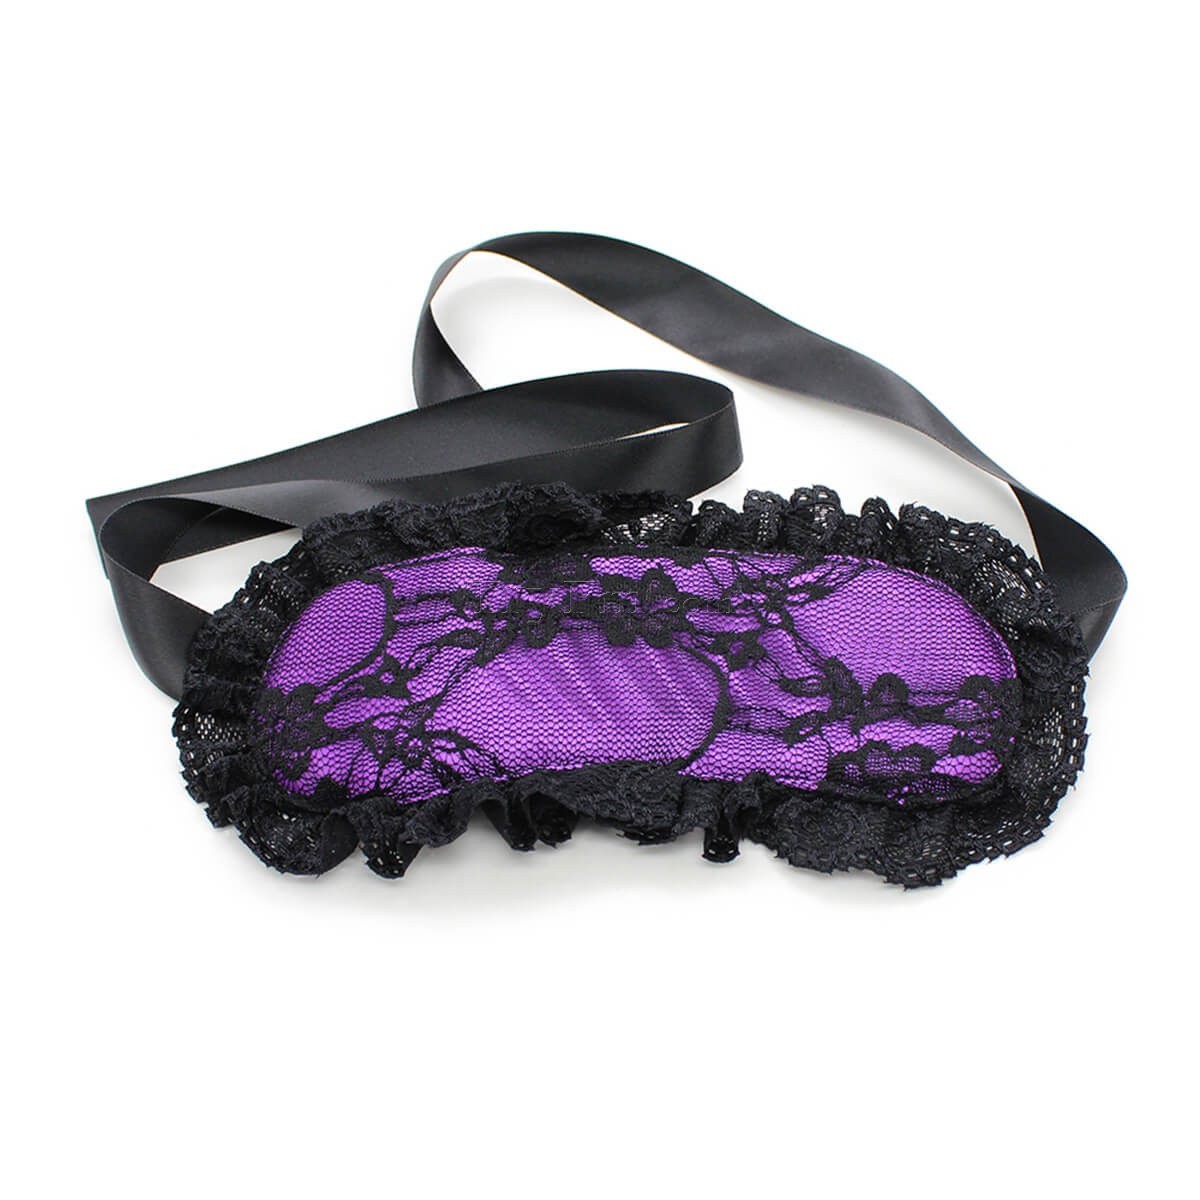 2-lace-blindfold-handcuffs-set-purple2.jpg